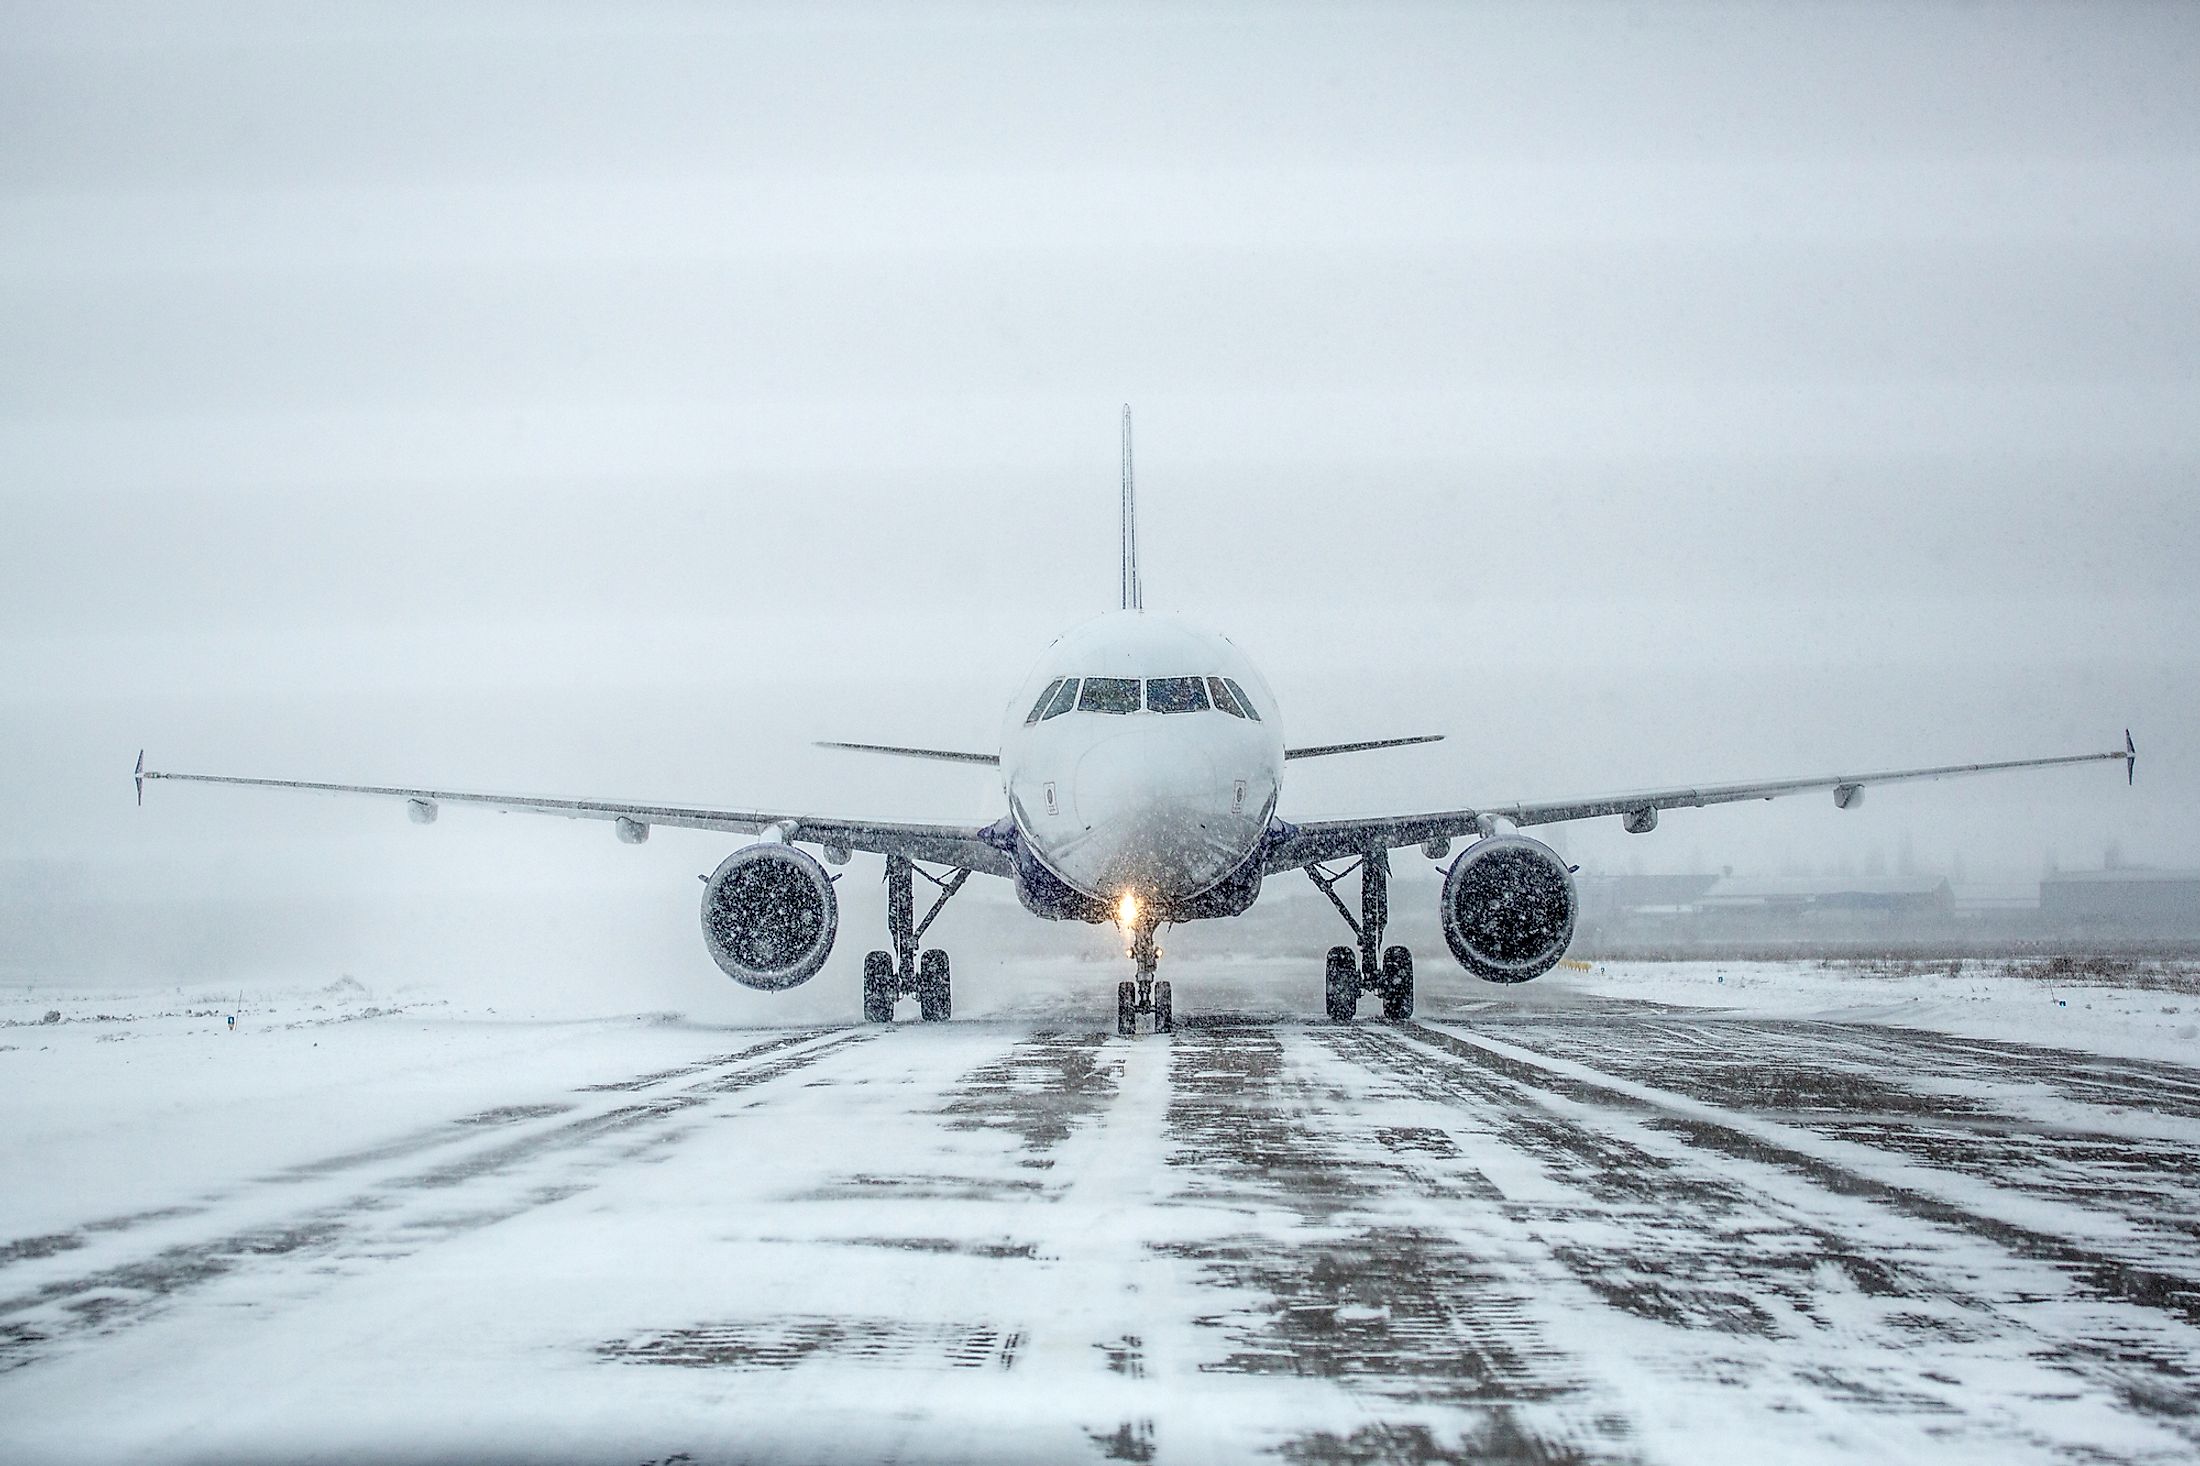 A plane landing in a blizzard.